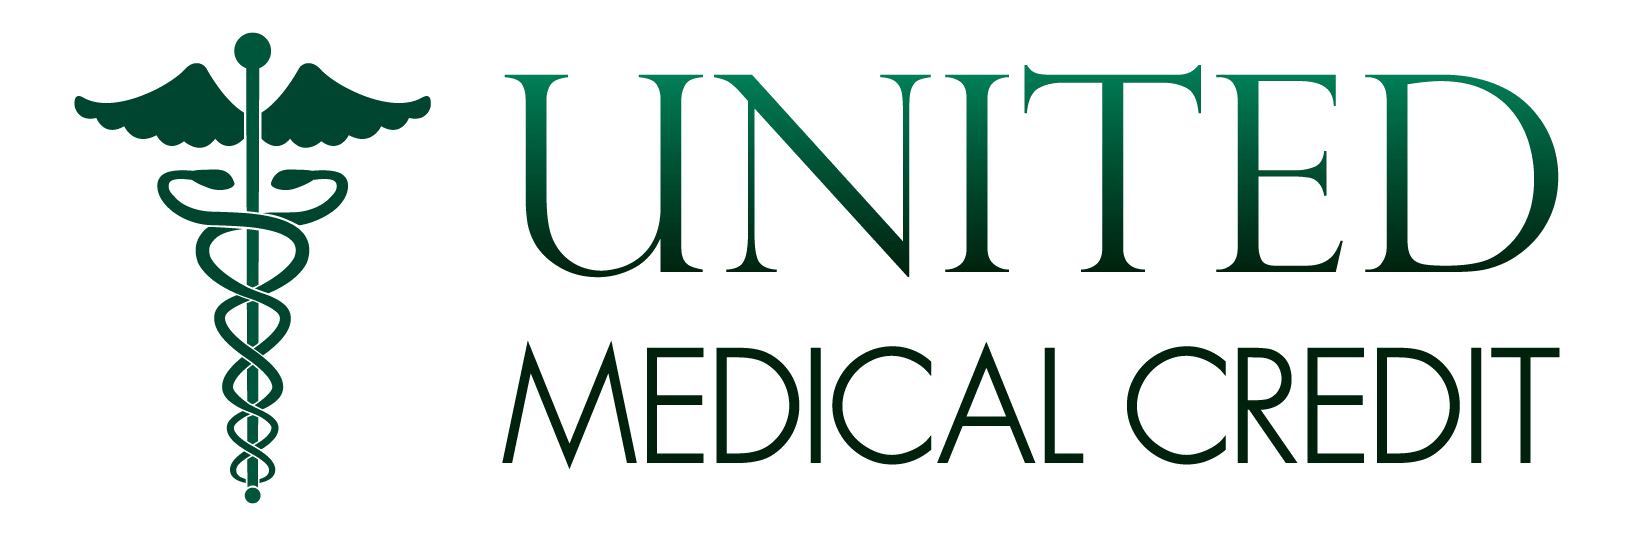 Scott Family Dentistry United Medical Credit Financing | Benton, AR